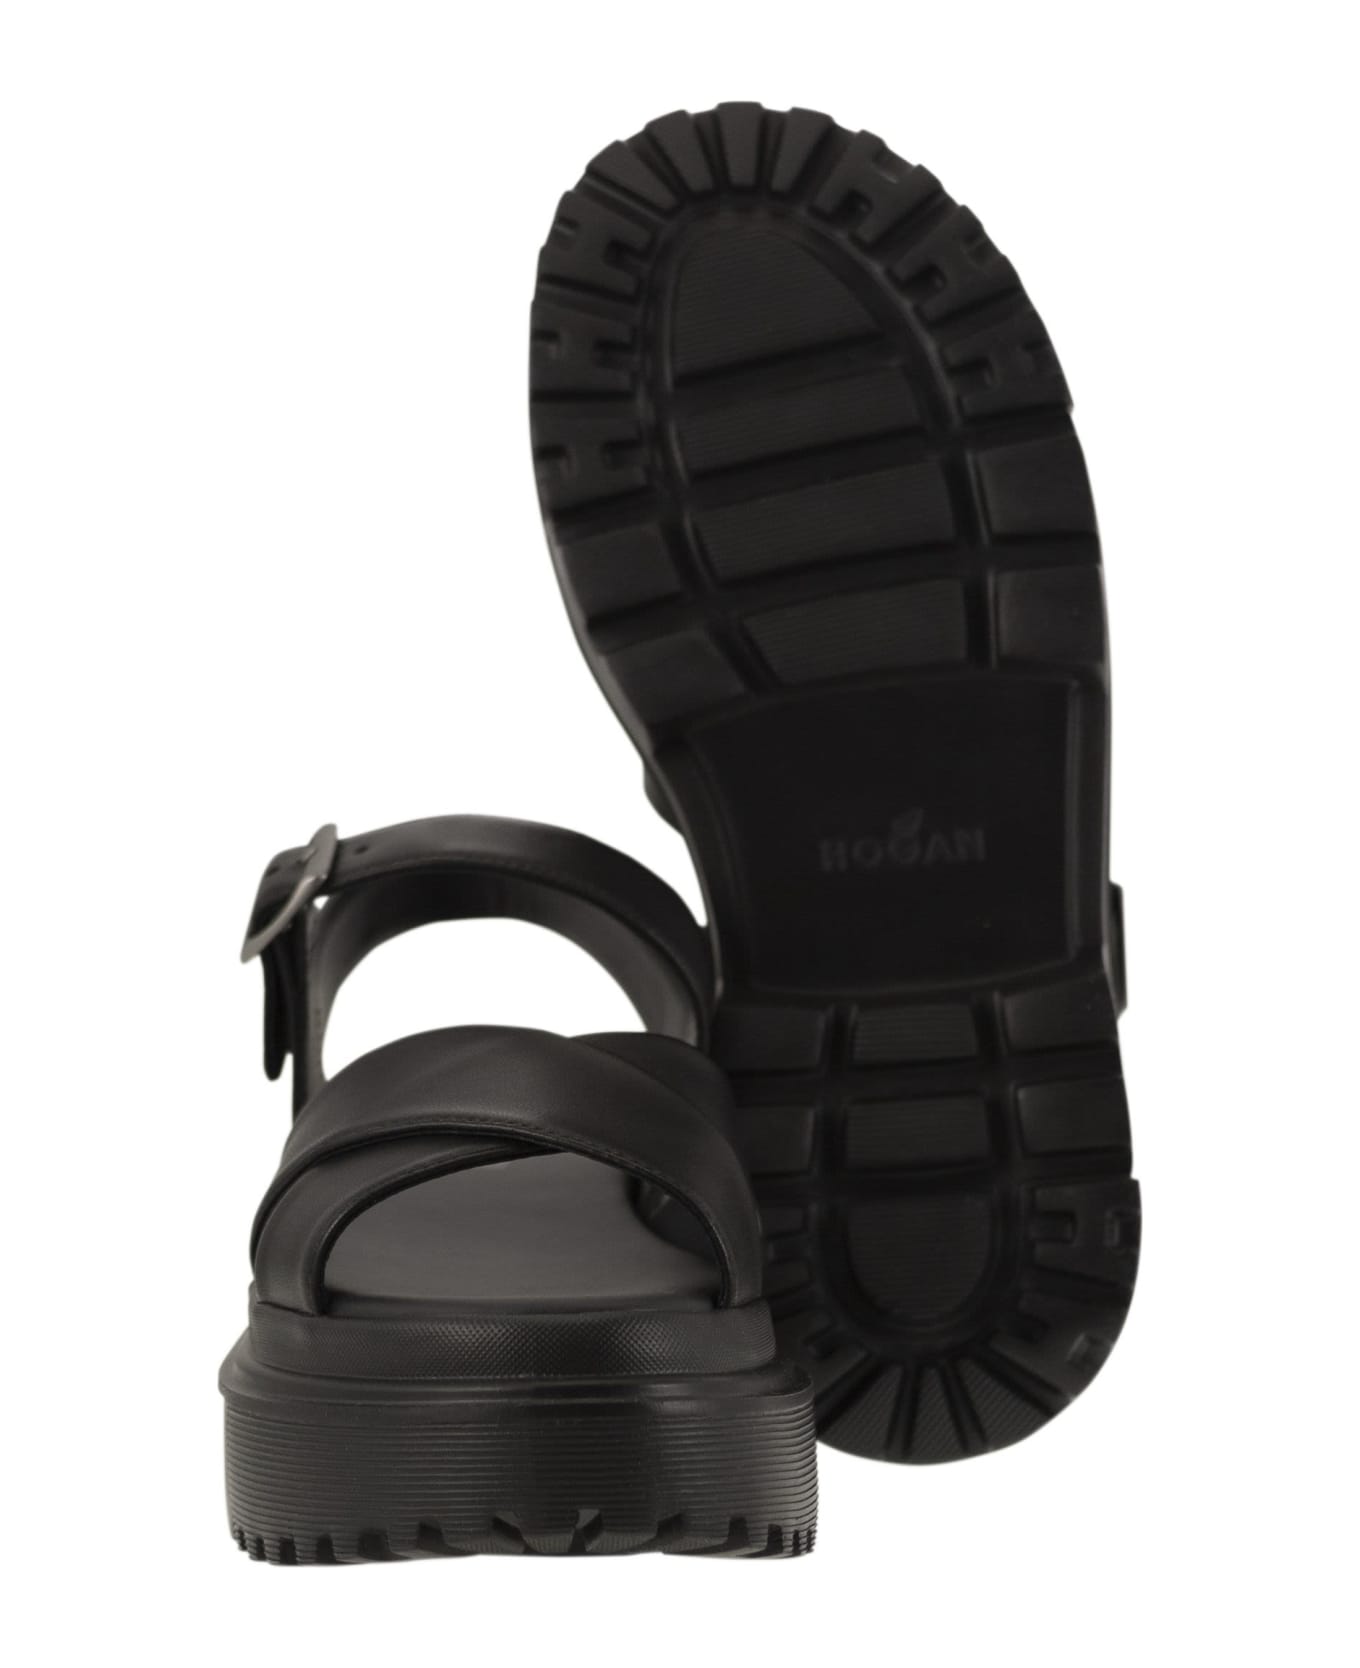 Hogan Leather Sandal With Midsole - Black サンダル